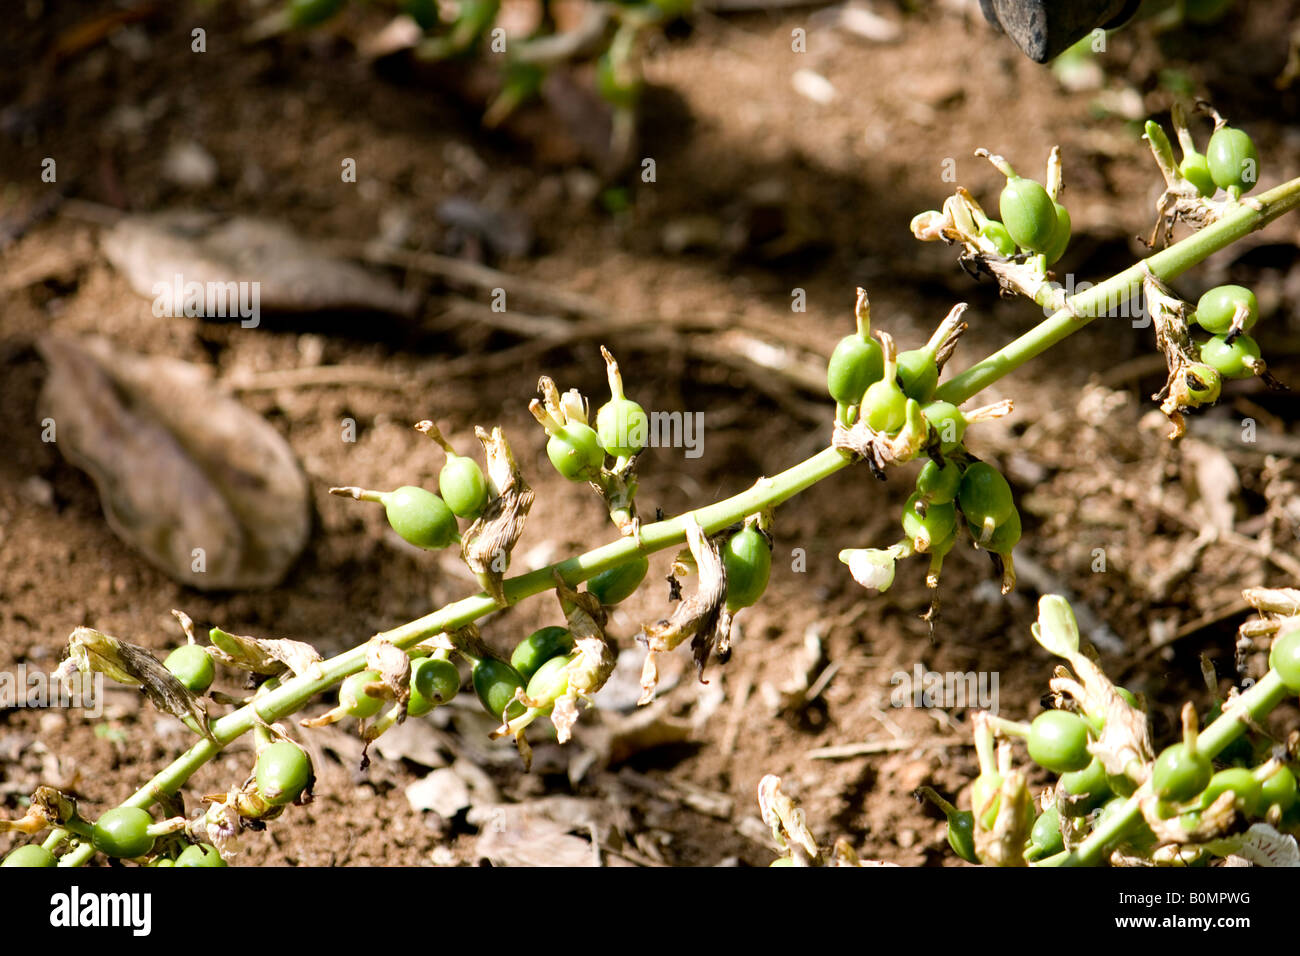 Cardamom seeds Stock Photo